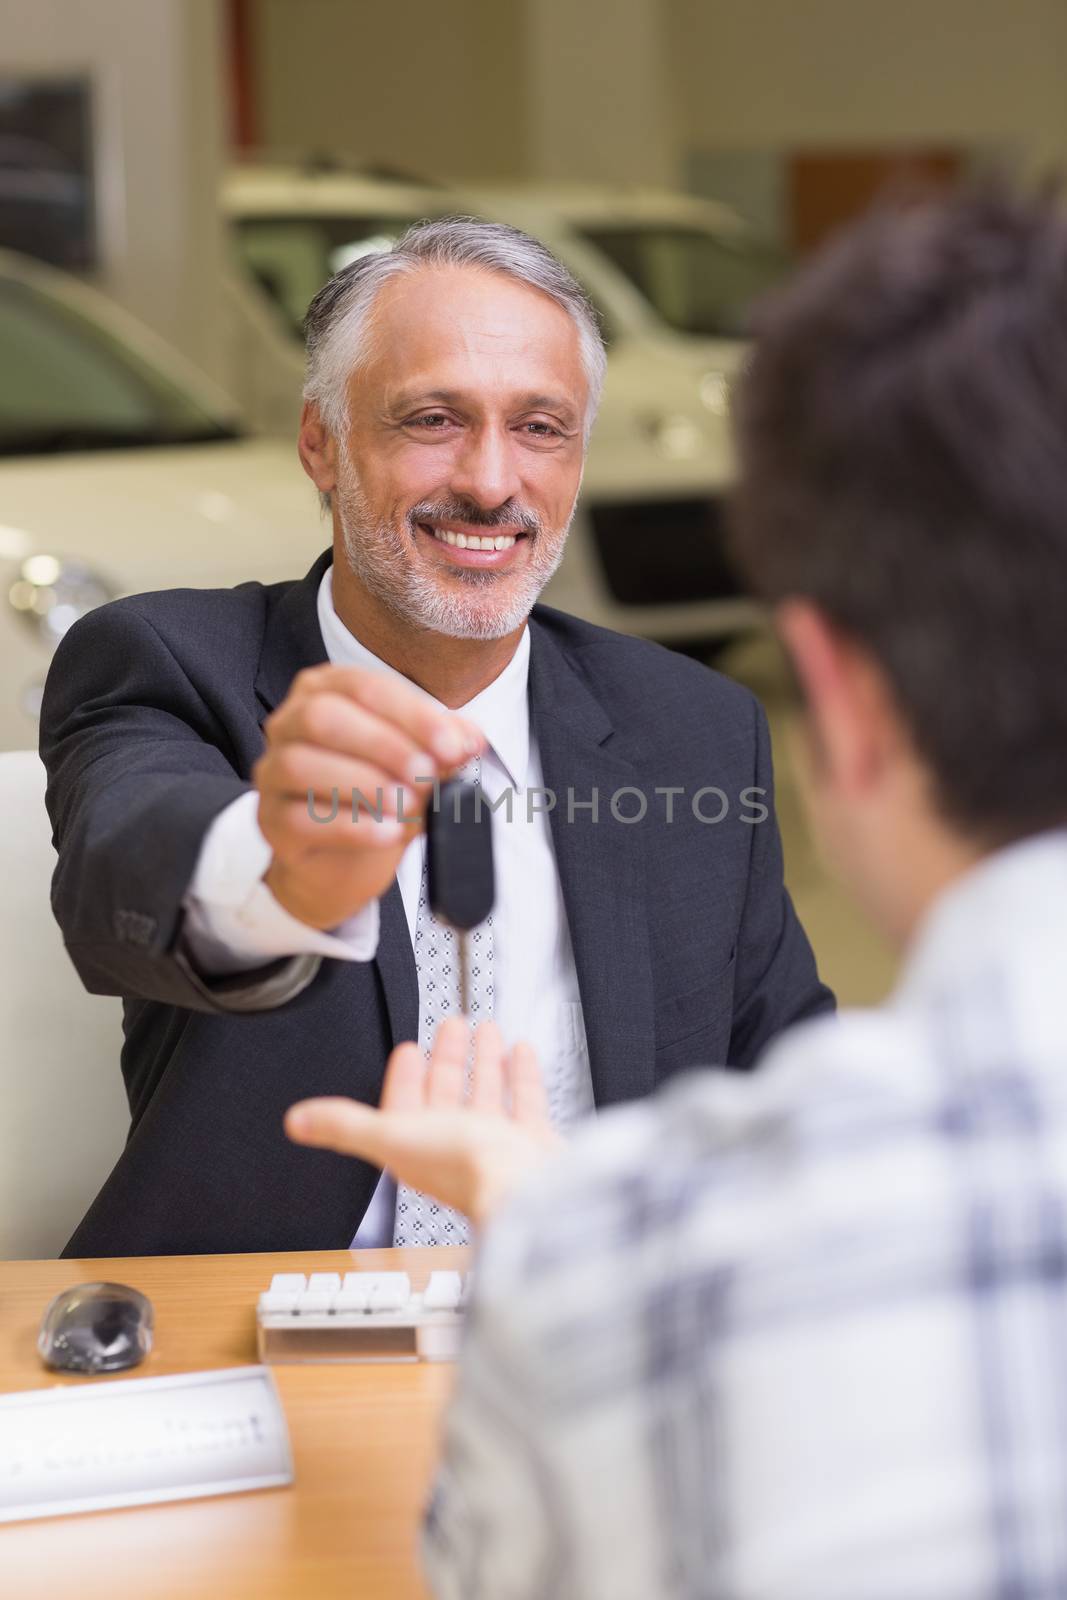 Smiling salesman giving a customer car keys by Wavebreakmedia